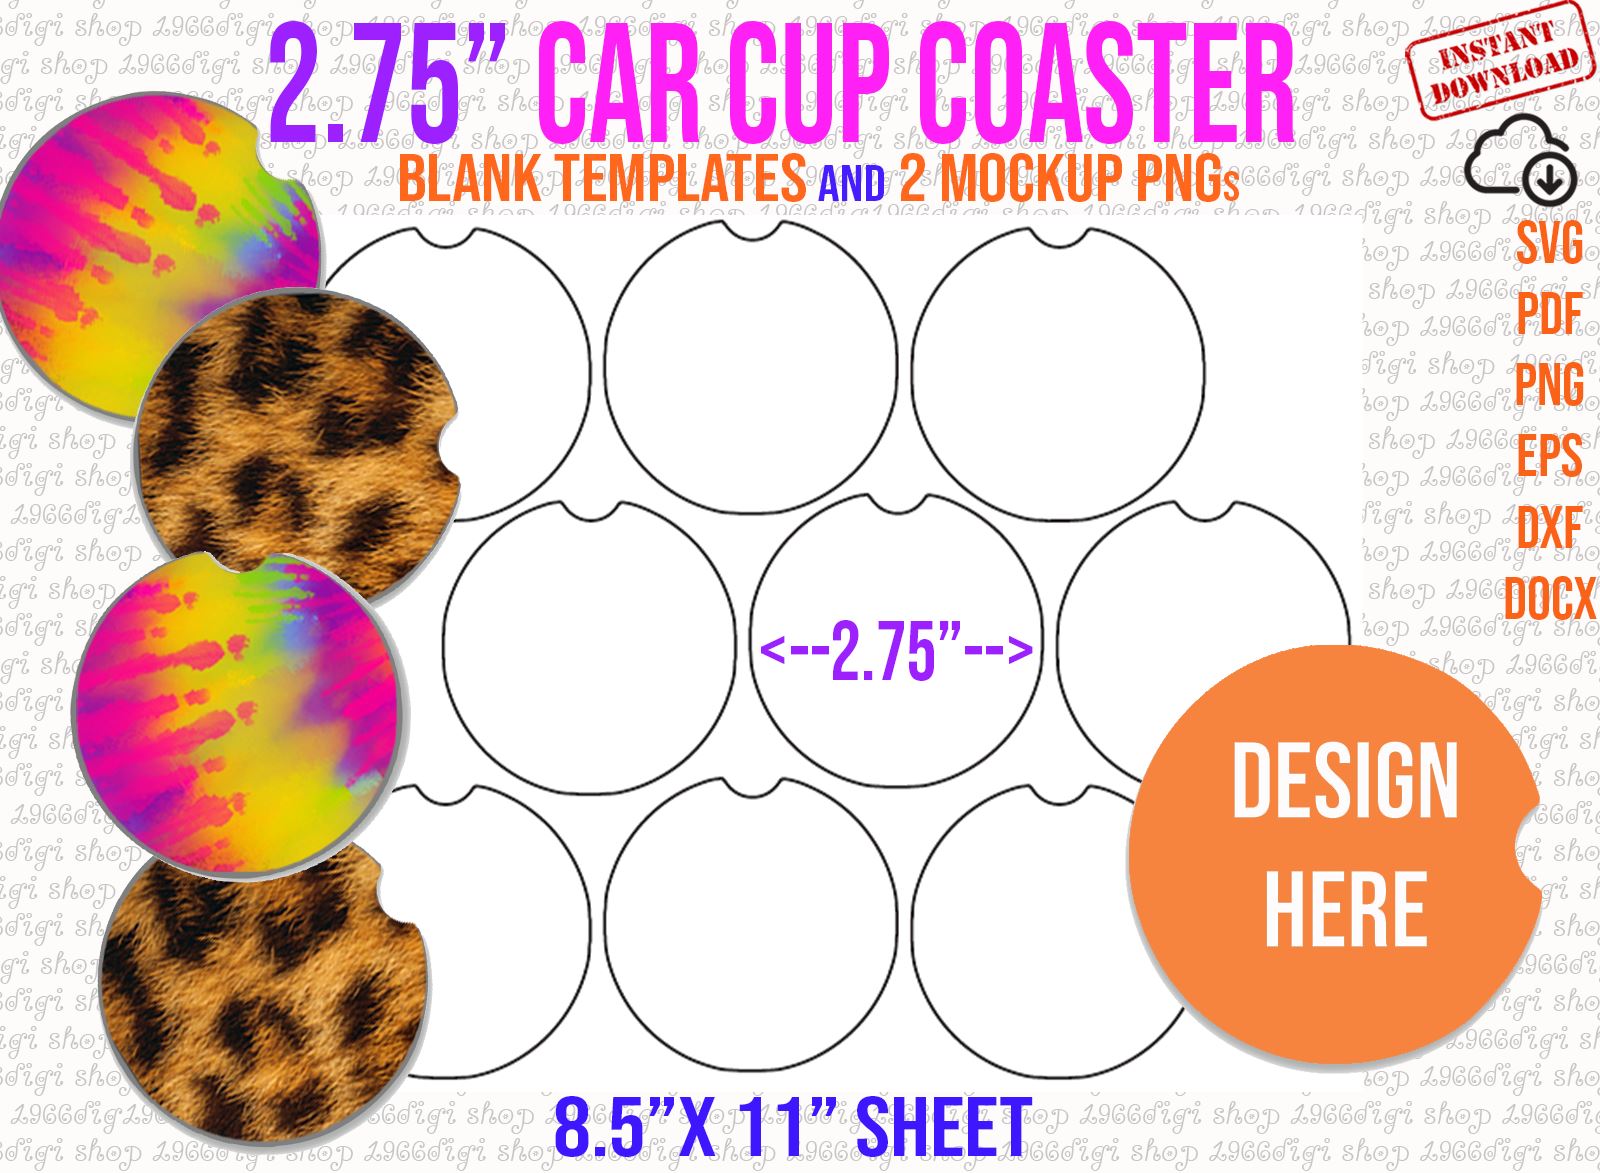 CAR COASTER 300 Designs Car Coasters Sublimation Designs Car Coaster Png  Sublimation Coasters Png Car Coaster Digital PNG Christmas Ornament 